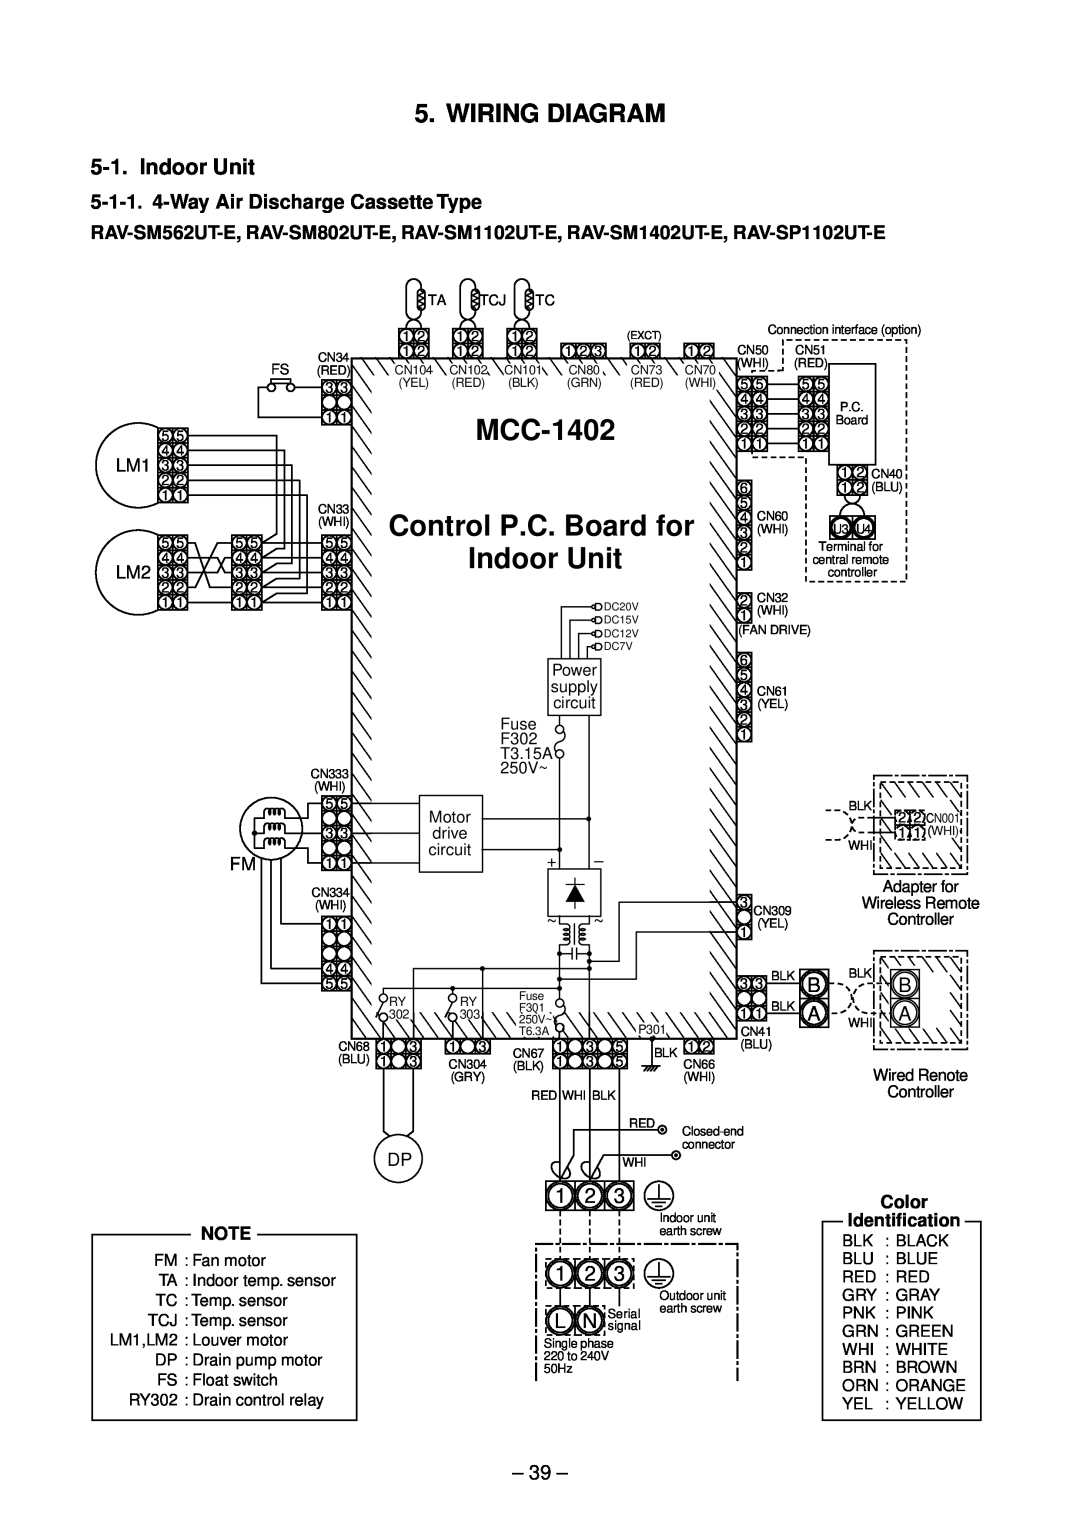 Toshiba RAV-SM562UT-E, RAV-SM1102UT-E, RAV-SM1402UT-E MCC-1402, Control P.C. Board for, Indoor Unit, Wiring Diagram 